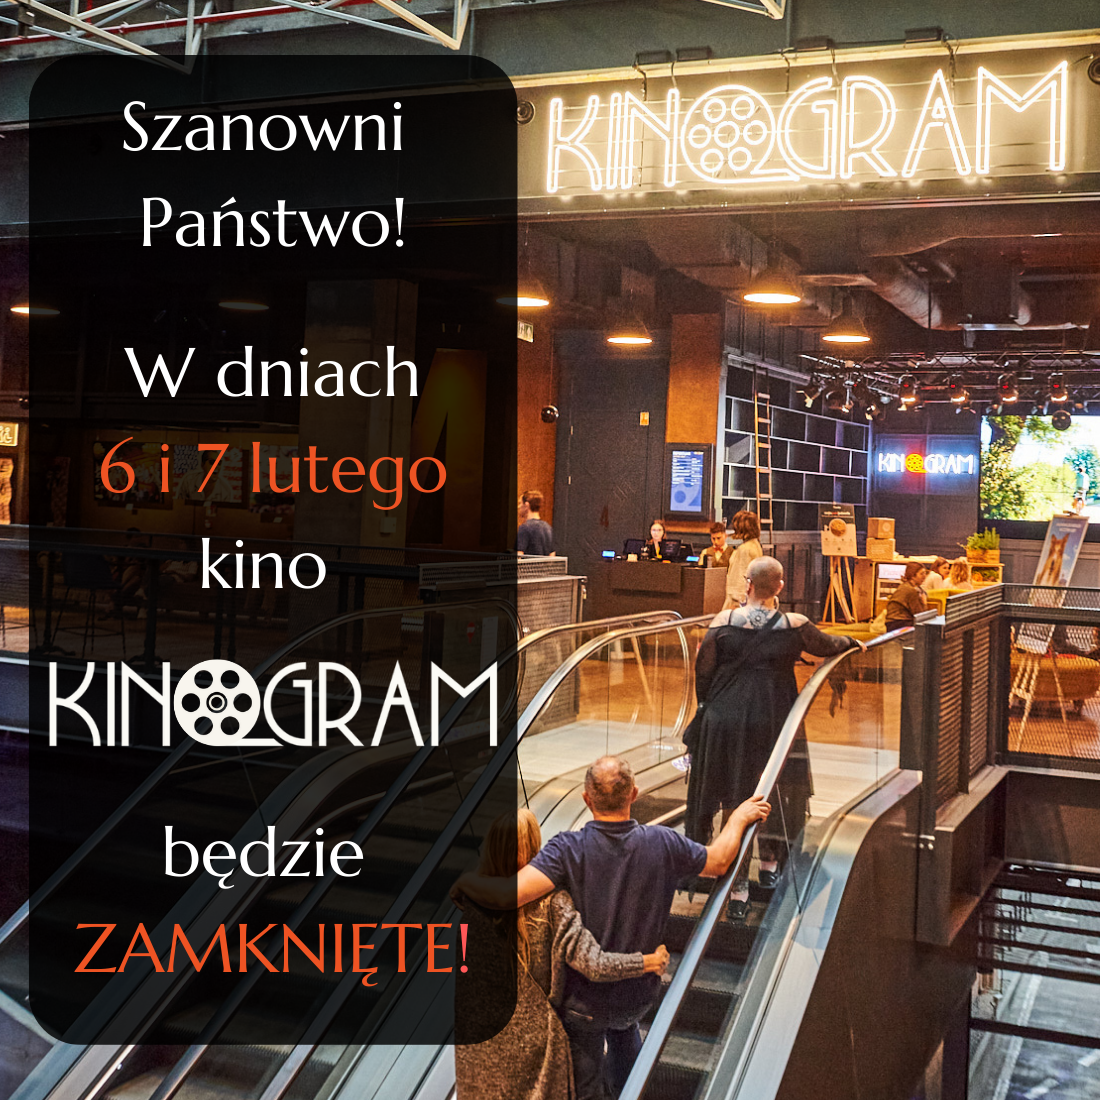 6 i 7 lutego kino KinoGram zamknięte!